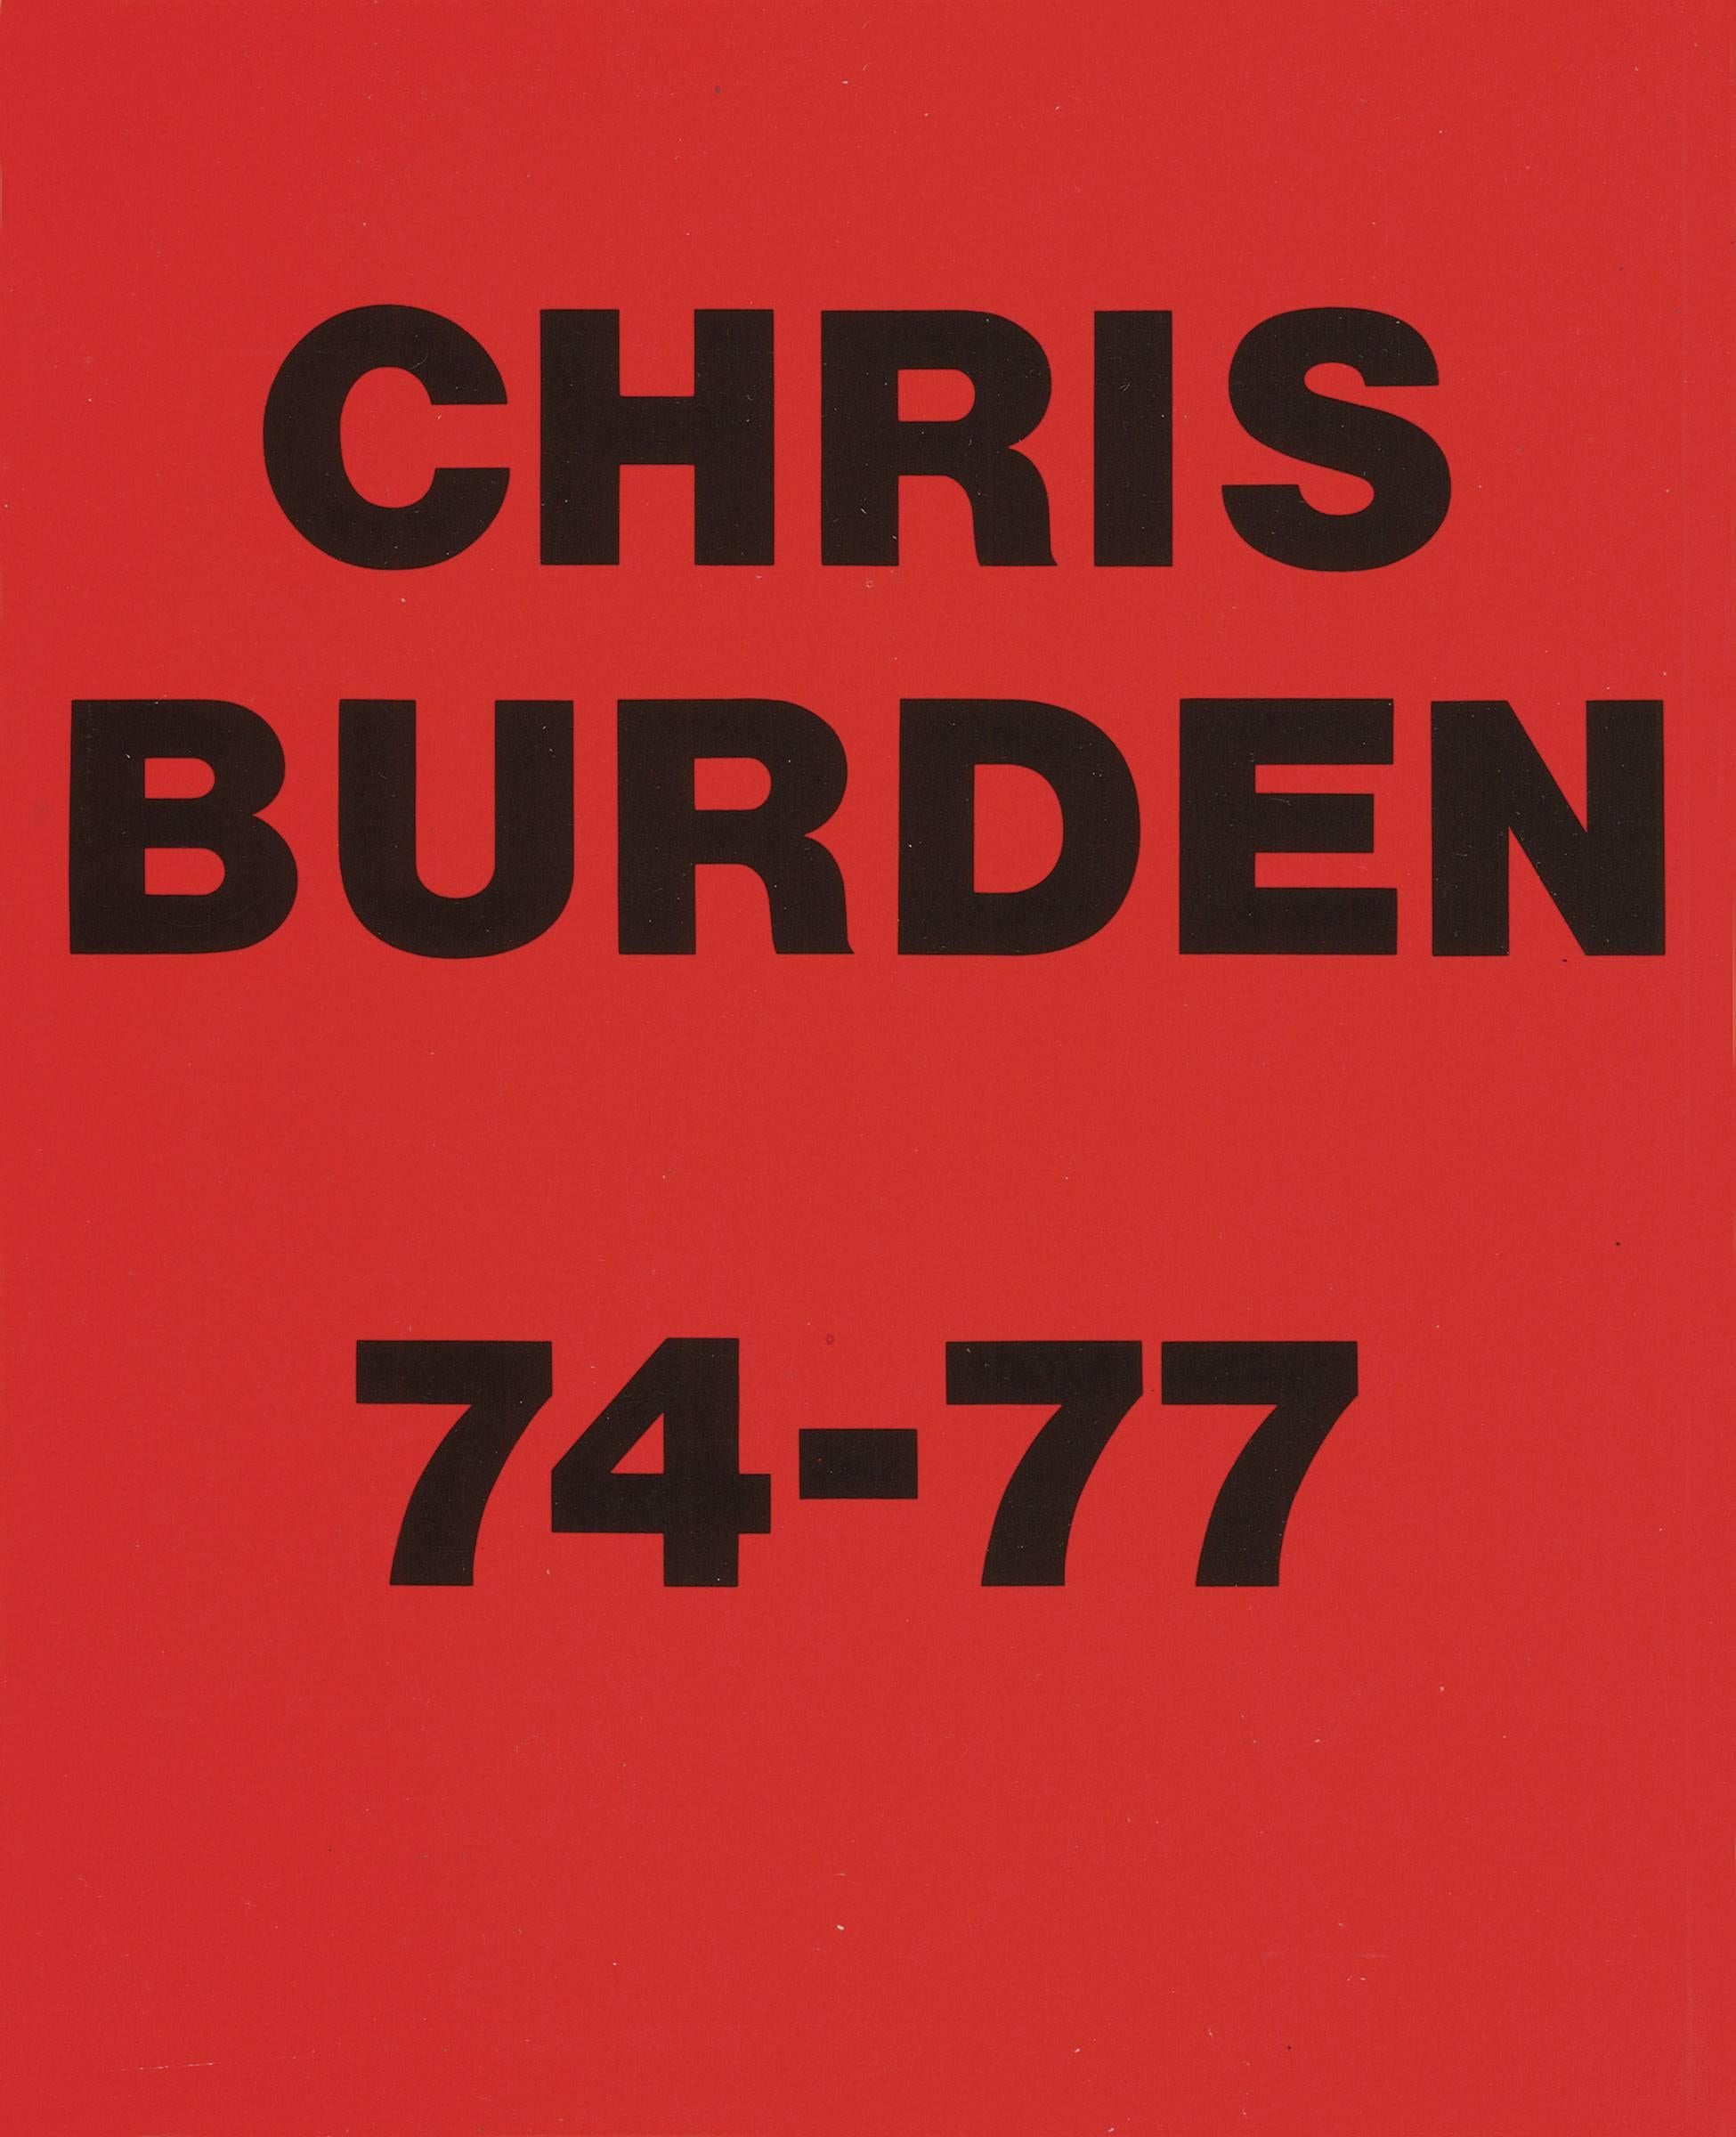 CHRIS BURDEN 74-77 [SIGNED] - Art by Chris Burden